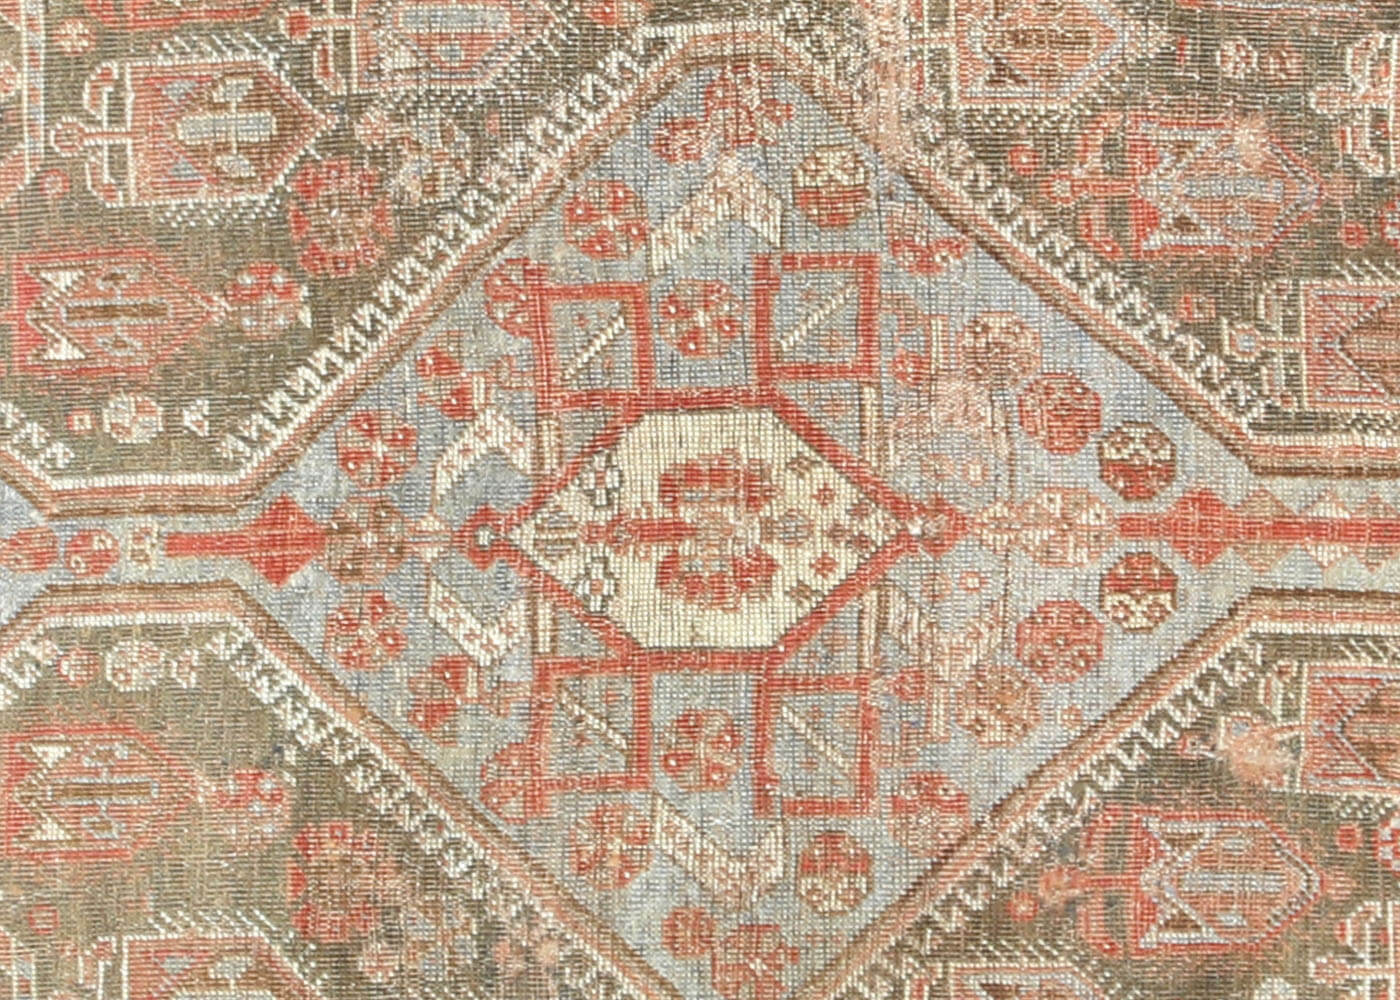 Antique Persian Shiraz Rug - 6'7" x 9'9"